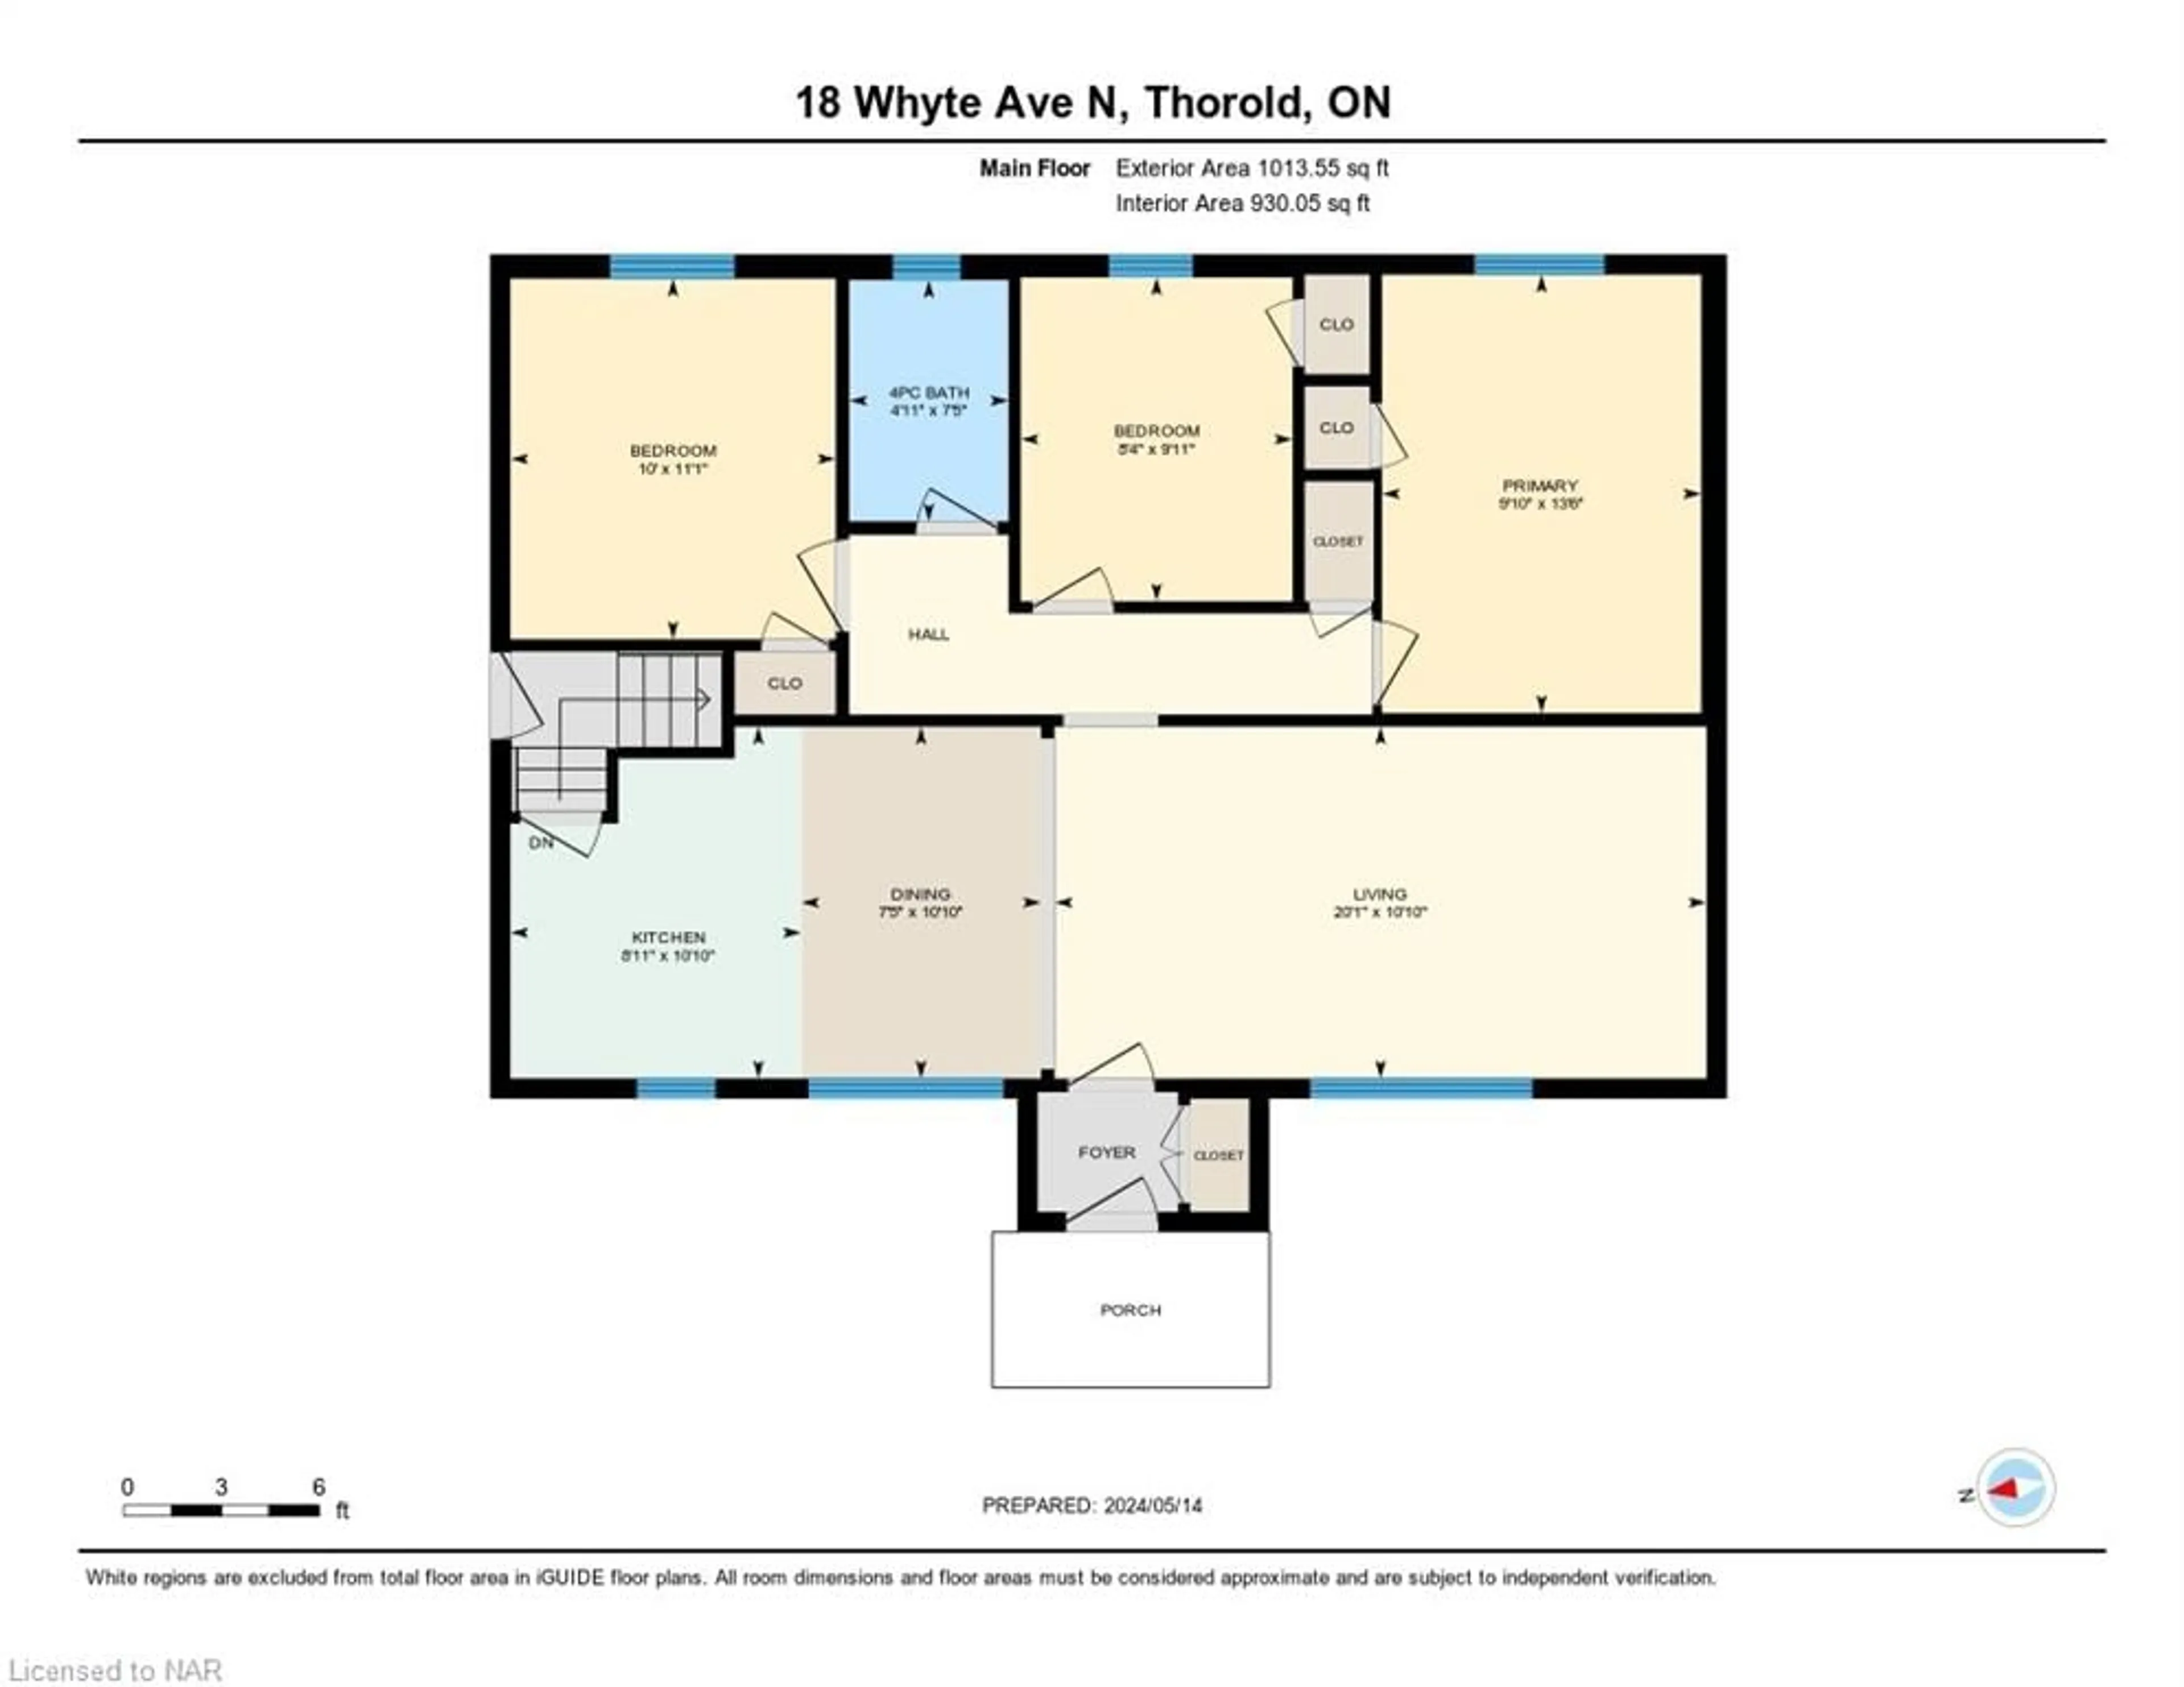 Floor plan for 18 Whyte Ave, Thorold Ontario L2V 2T3